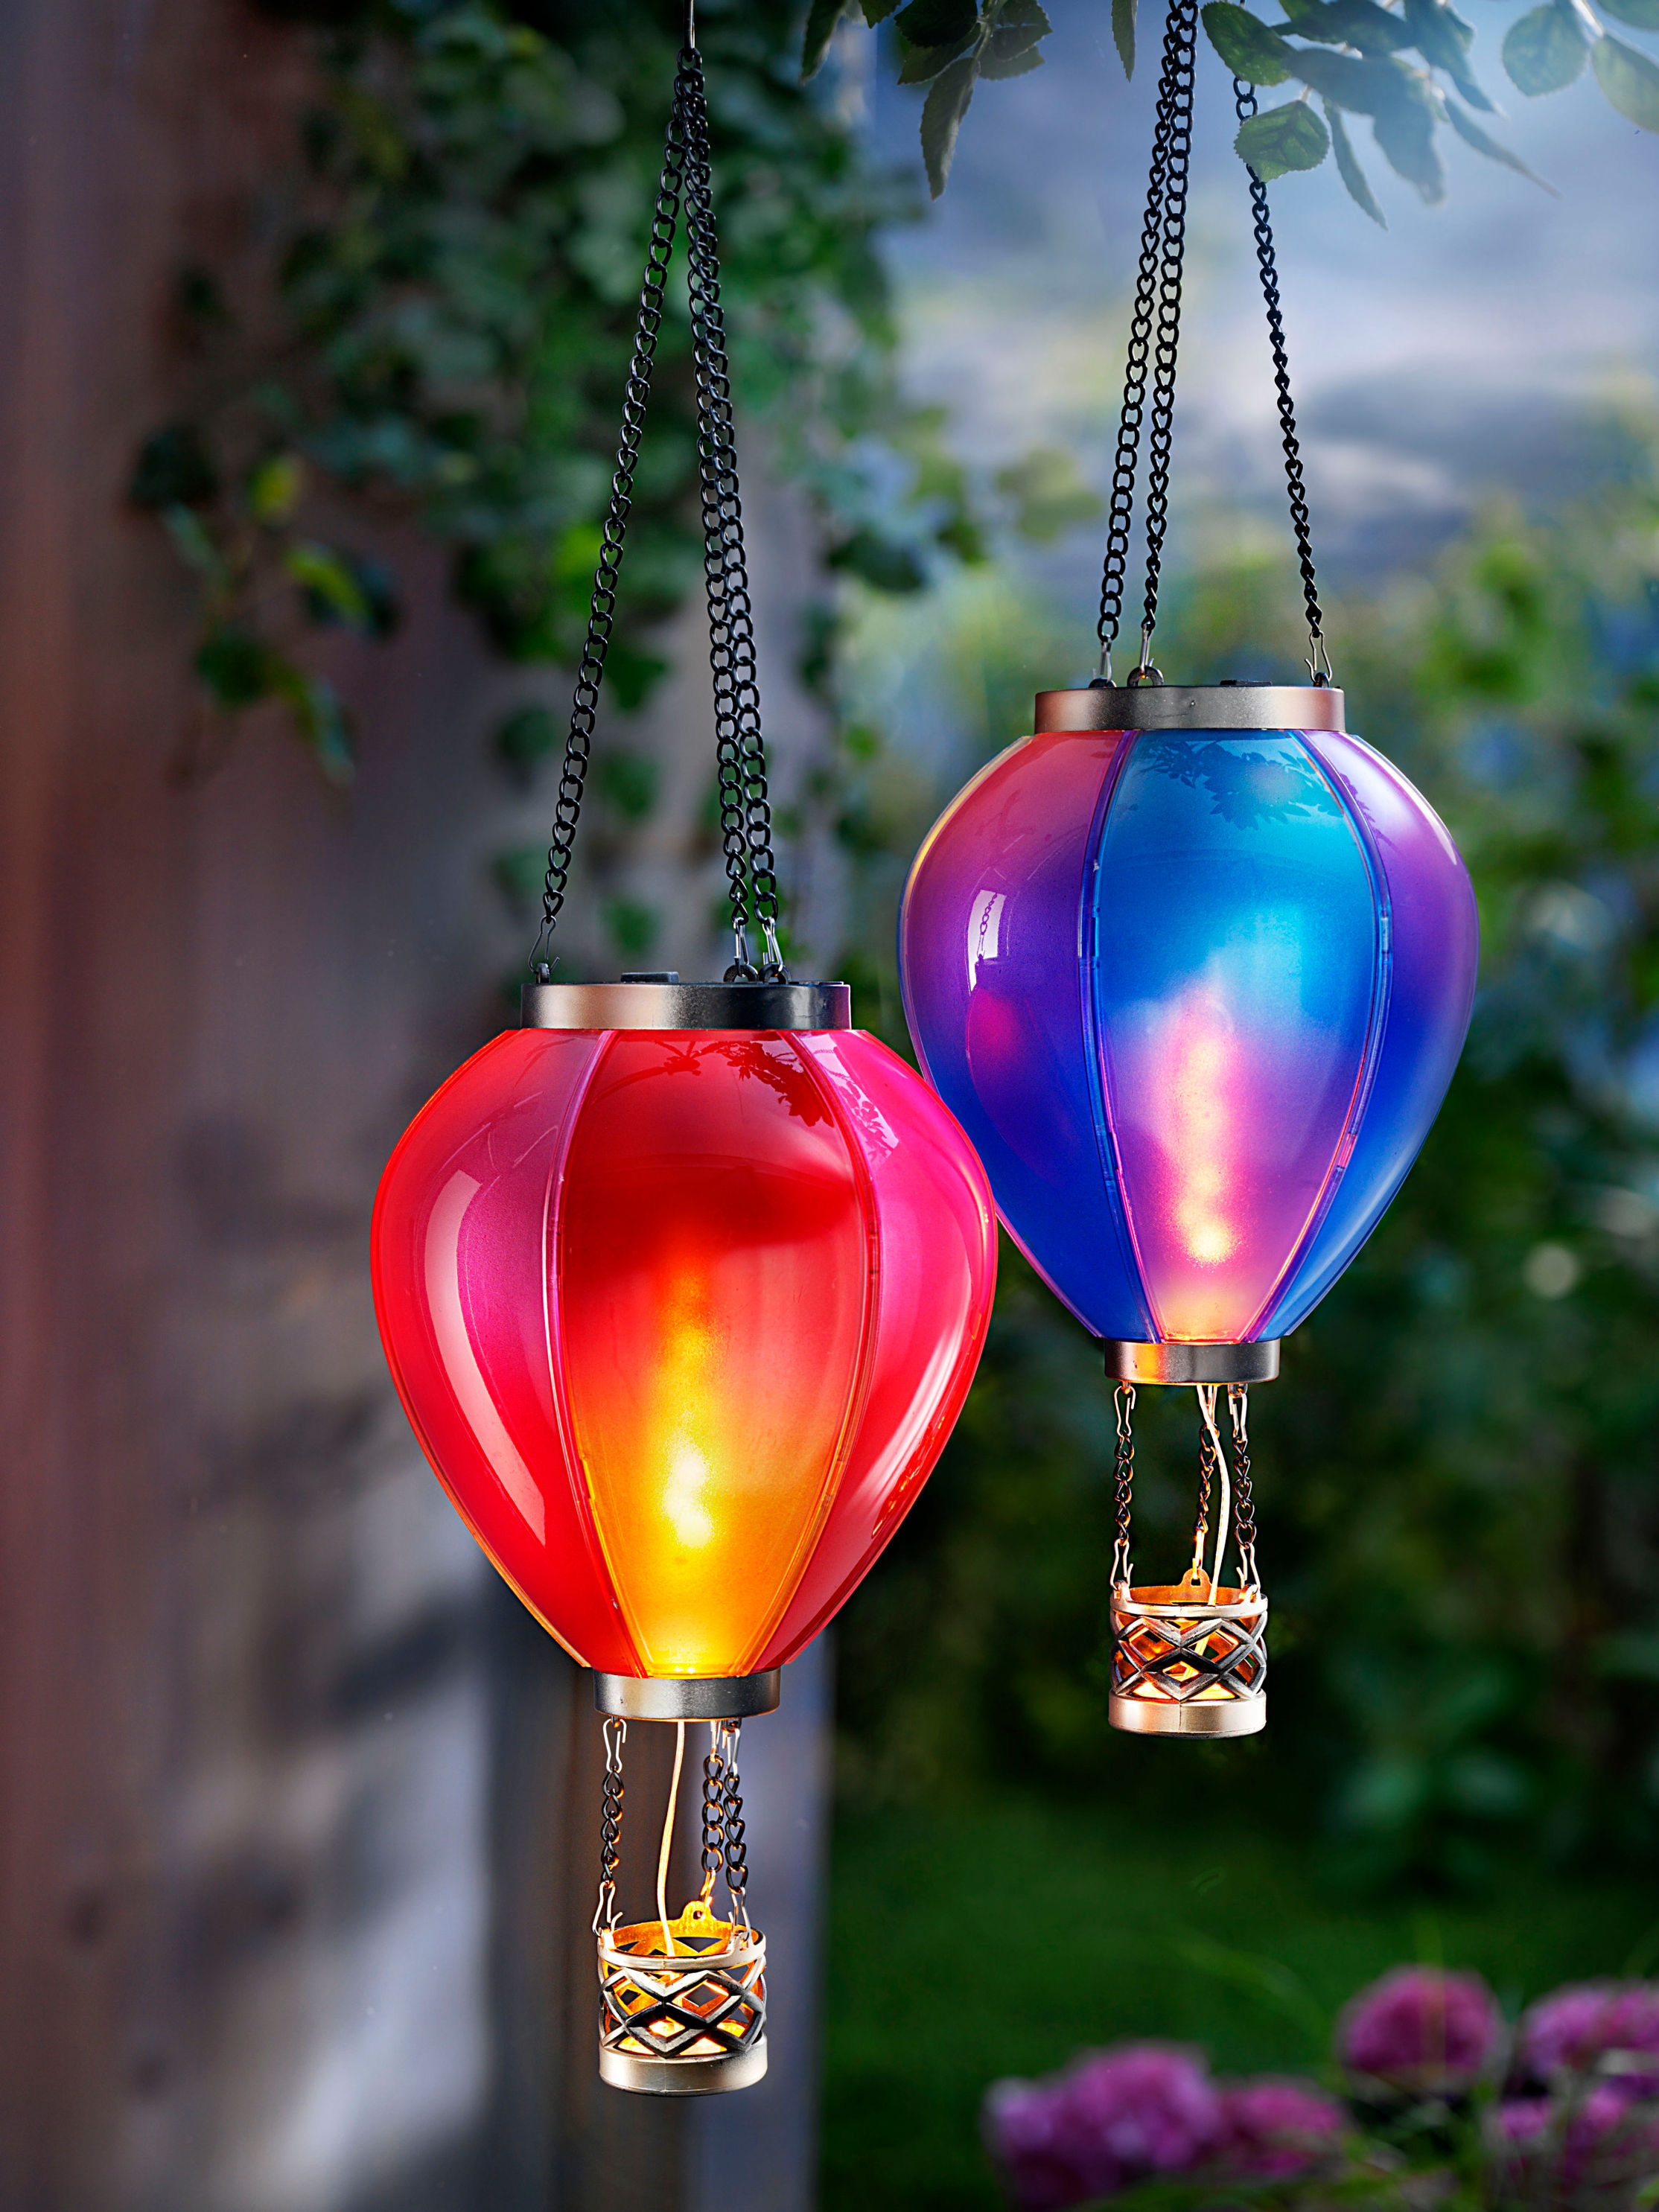 Solar-Hängedeko Heißluftballon Farbe: rot bestellen | Weltbild.de